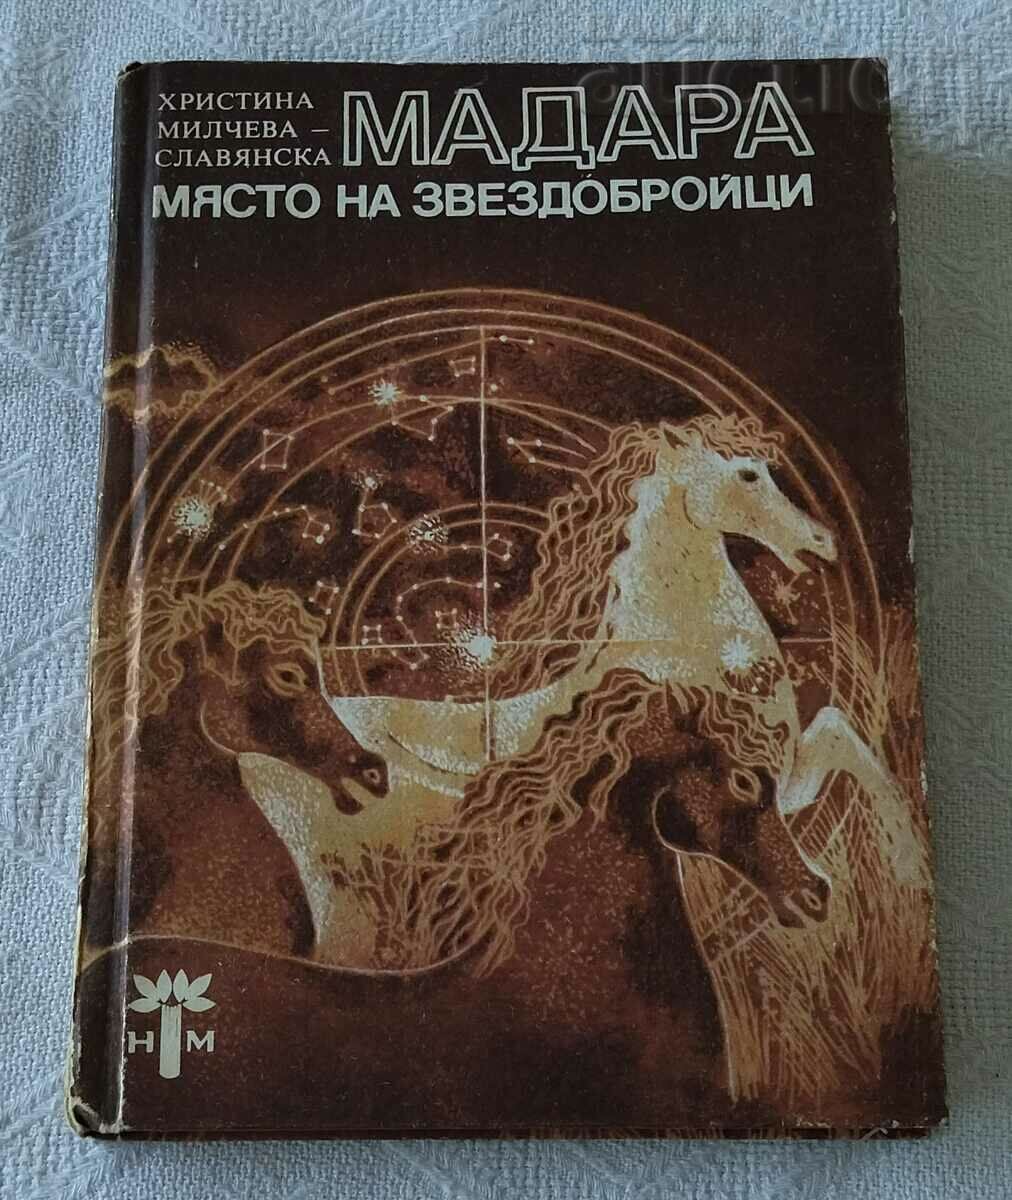 MADARA - PLACE OF STAR COUNTERS HR. MILCHEVA-SLAVIANSKA 1983